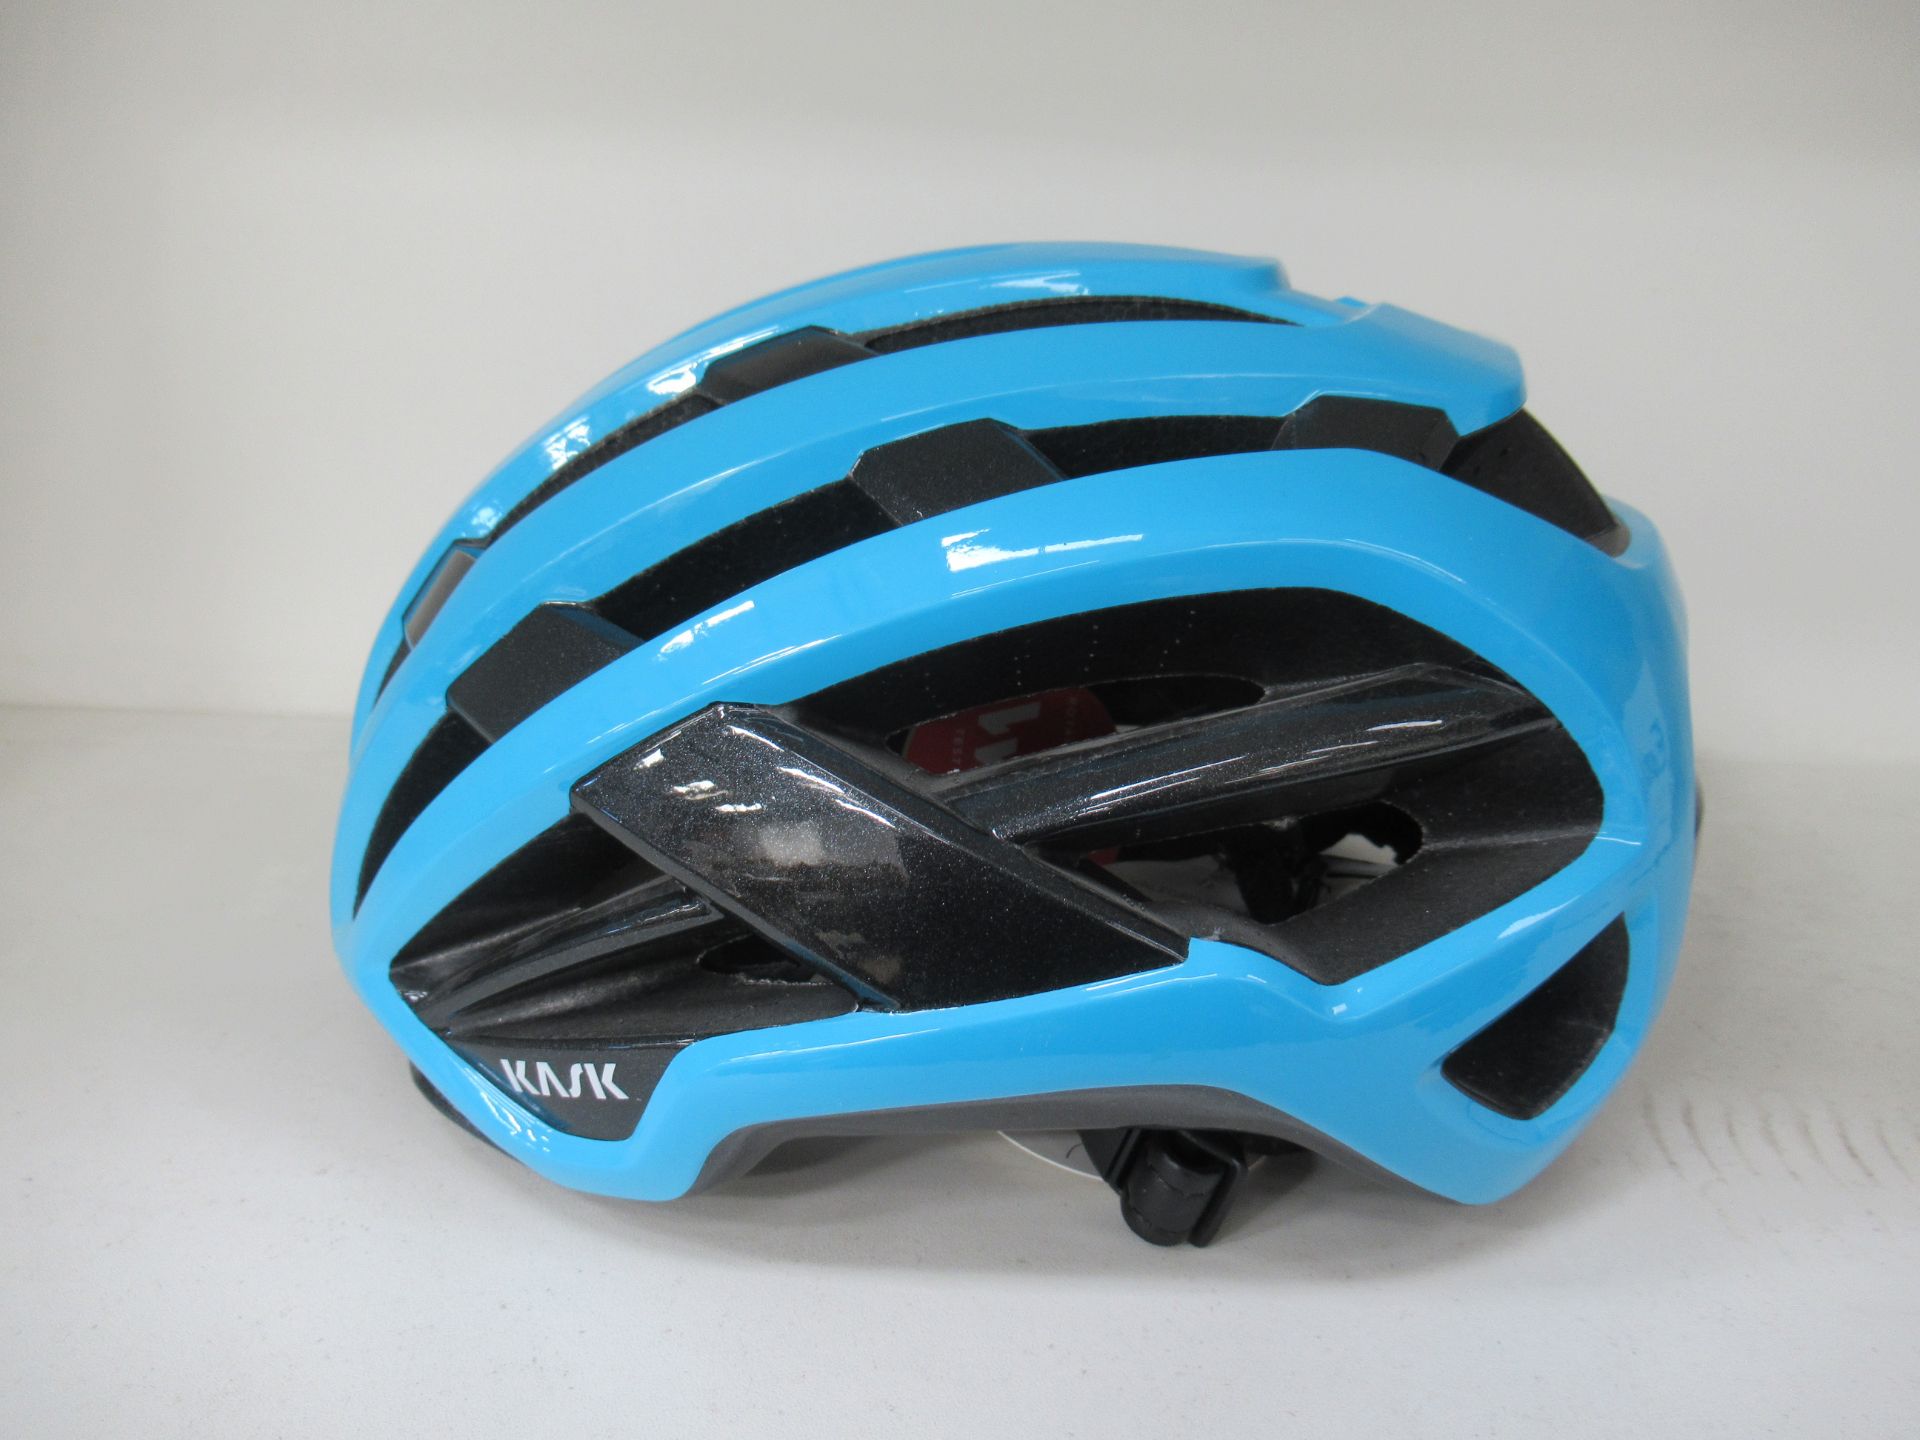 KASK Valegro light blue large sized helmet - boxed (RRP£185)